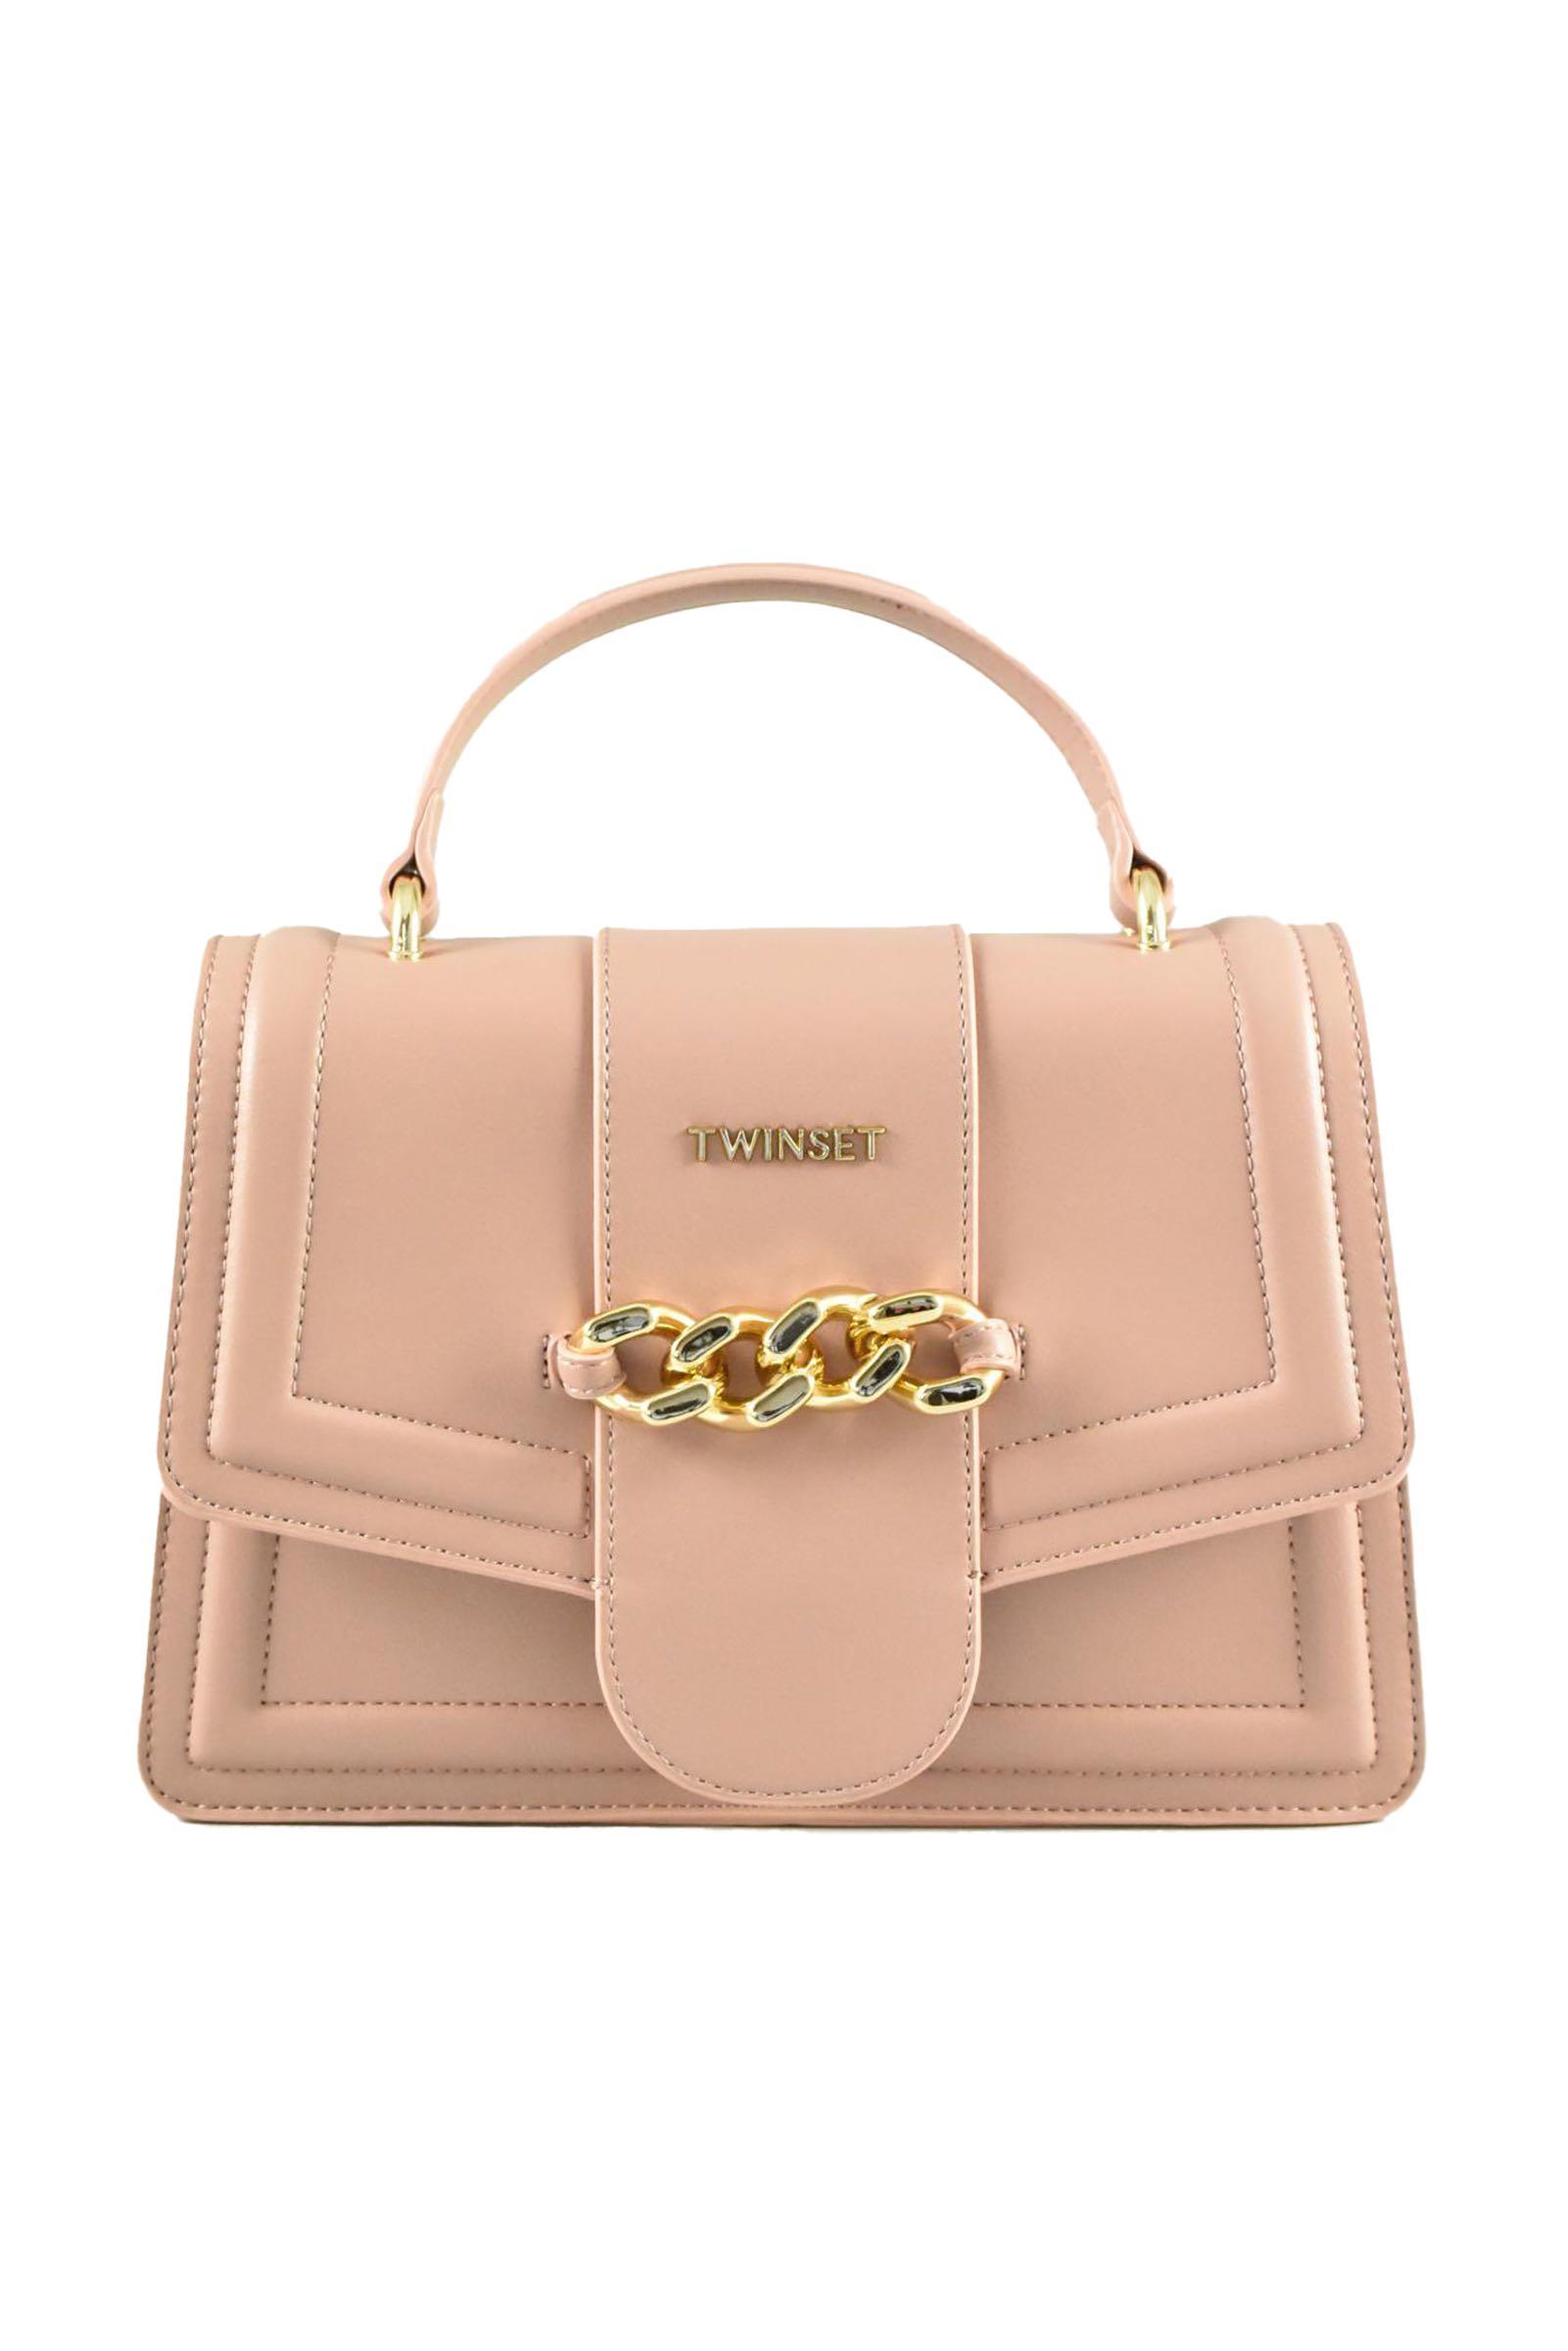 TWIN SET Women's Pink Handbag